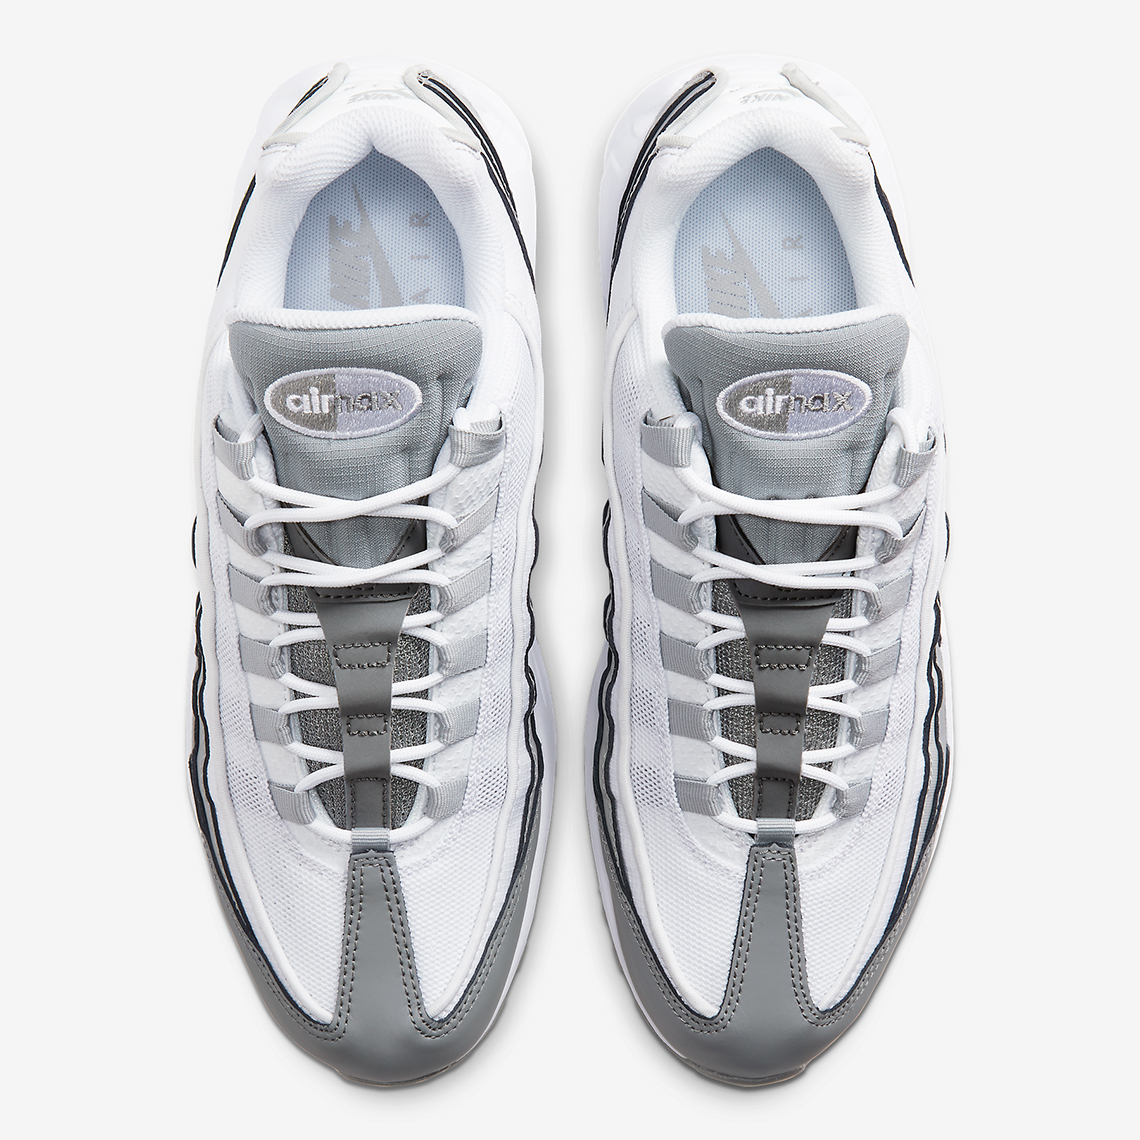 Nike Air Max 95 Grey CT1268-001 Release Info | SneakerNews.com